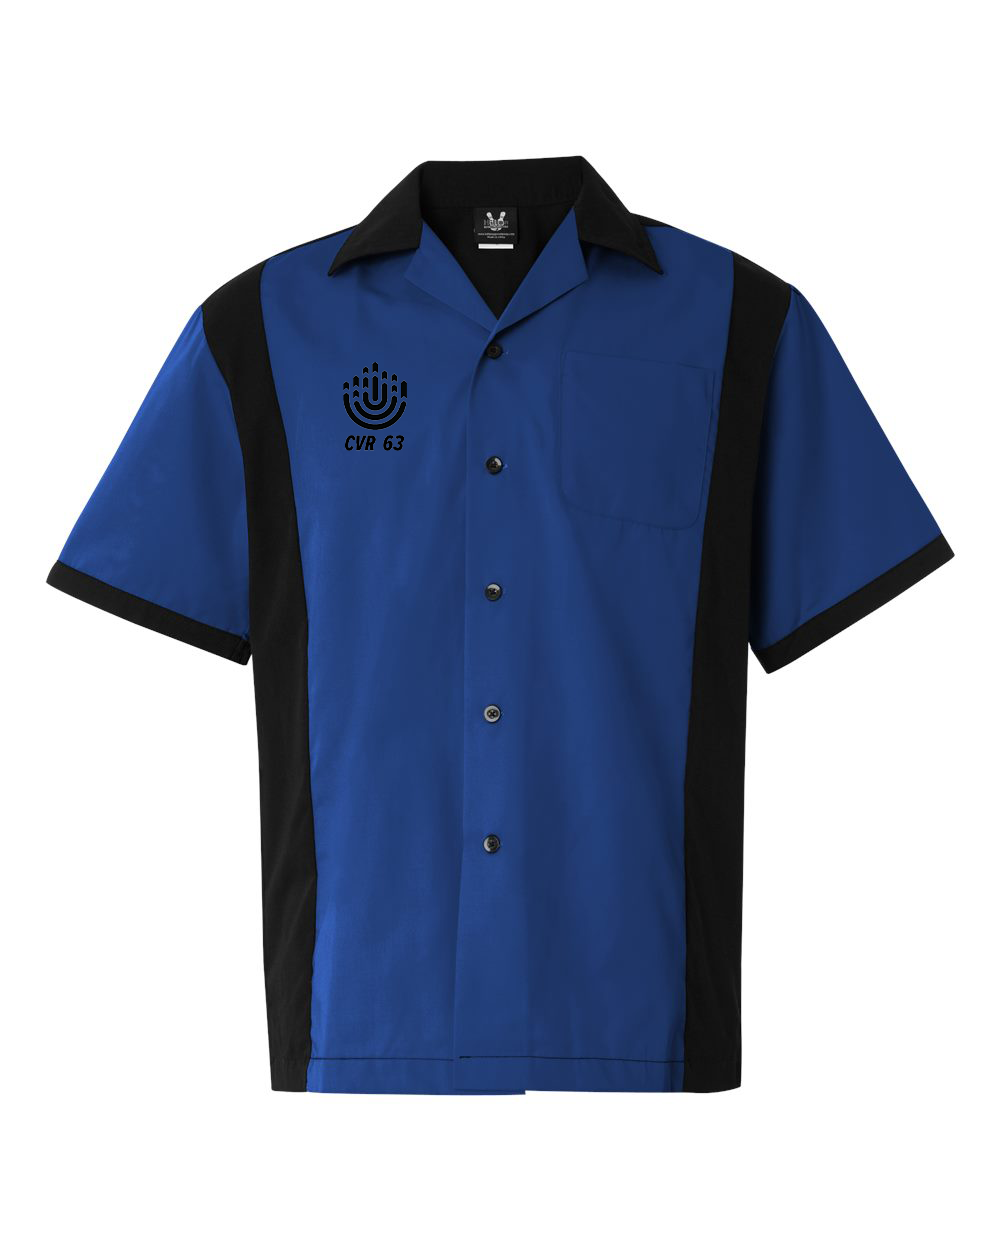 Hilton HP2243 - Cruiser Bowling Shirt